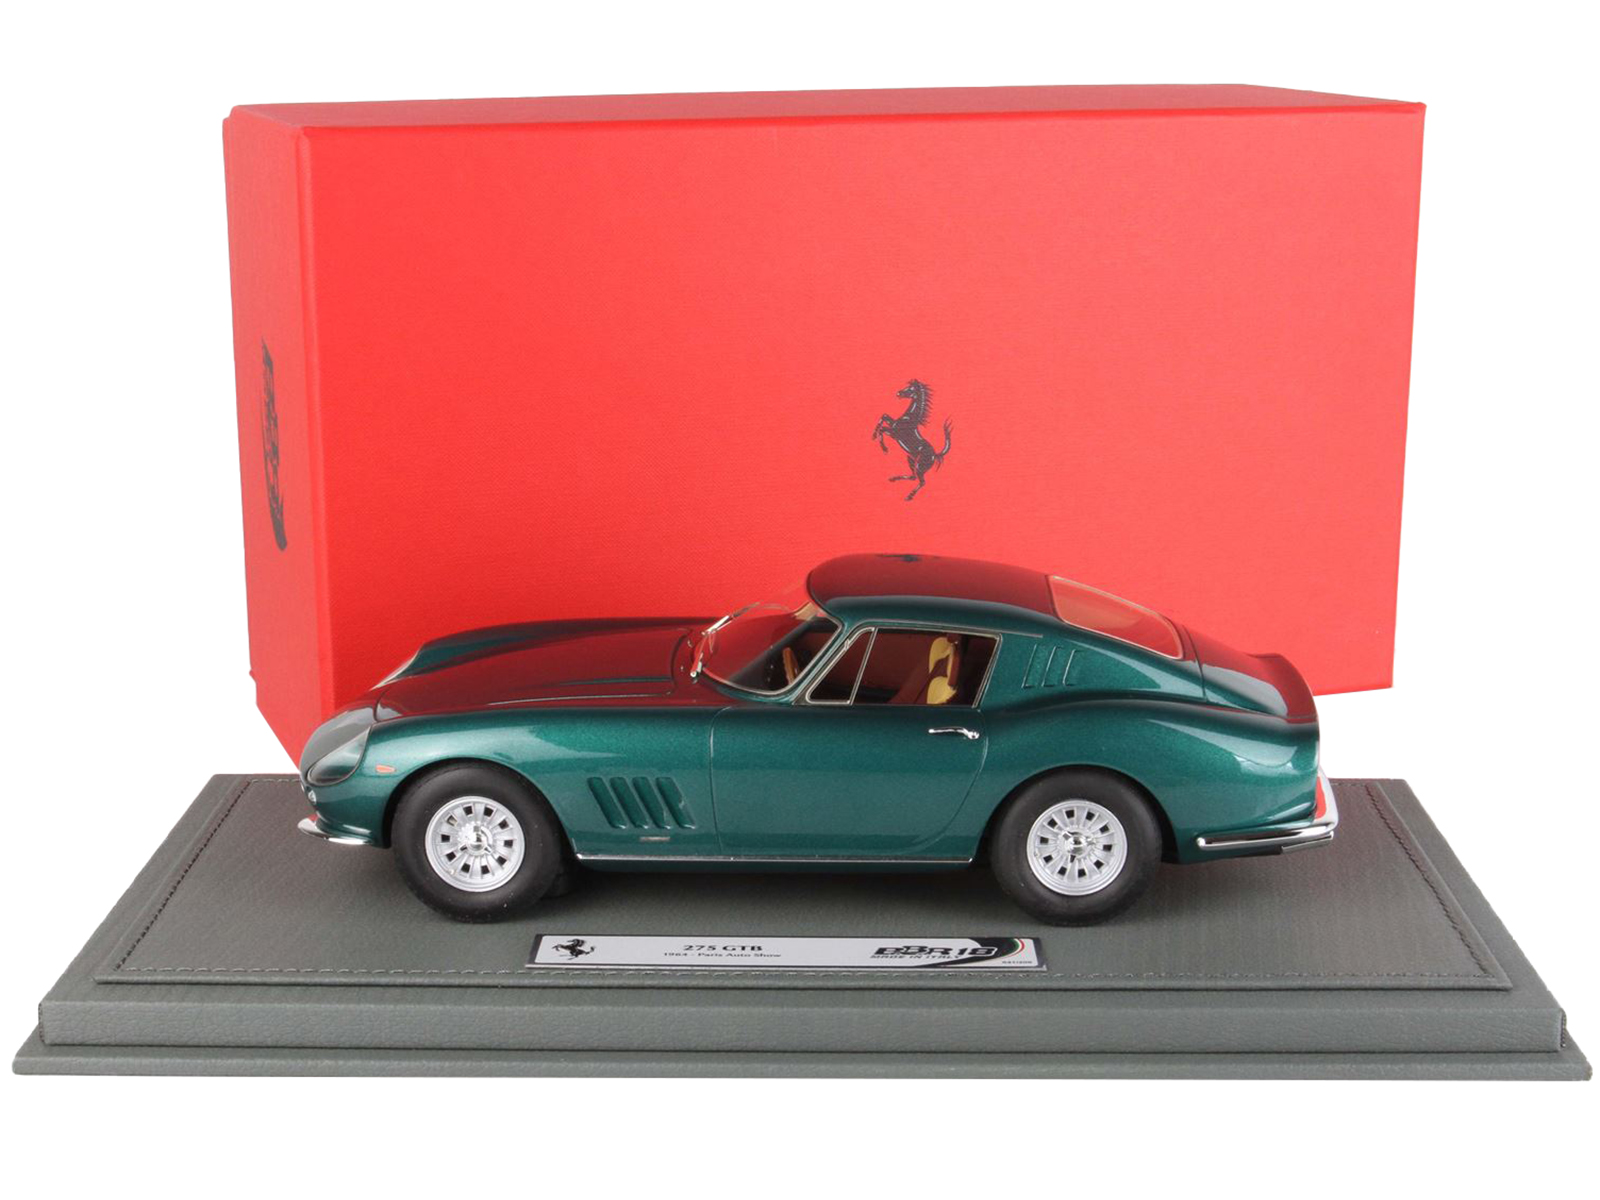 Ferrari 275 GTB Dark Green Metallic "Paris Auto Show" (1964) with DISPLAY CASE Limited Edition to 200 pieces Worldwide 1/18 Model Car by BBR